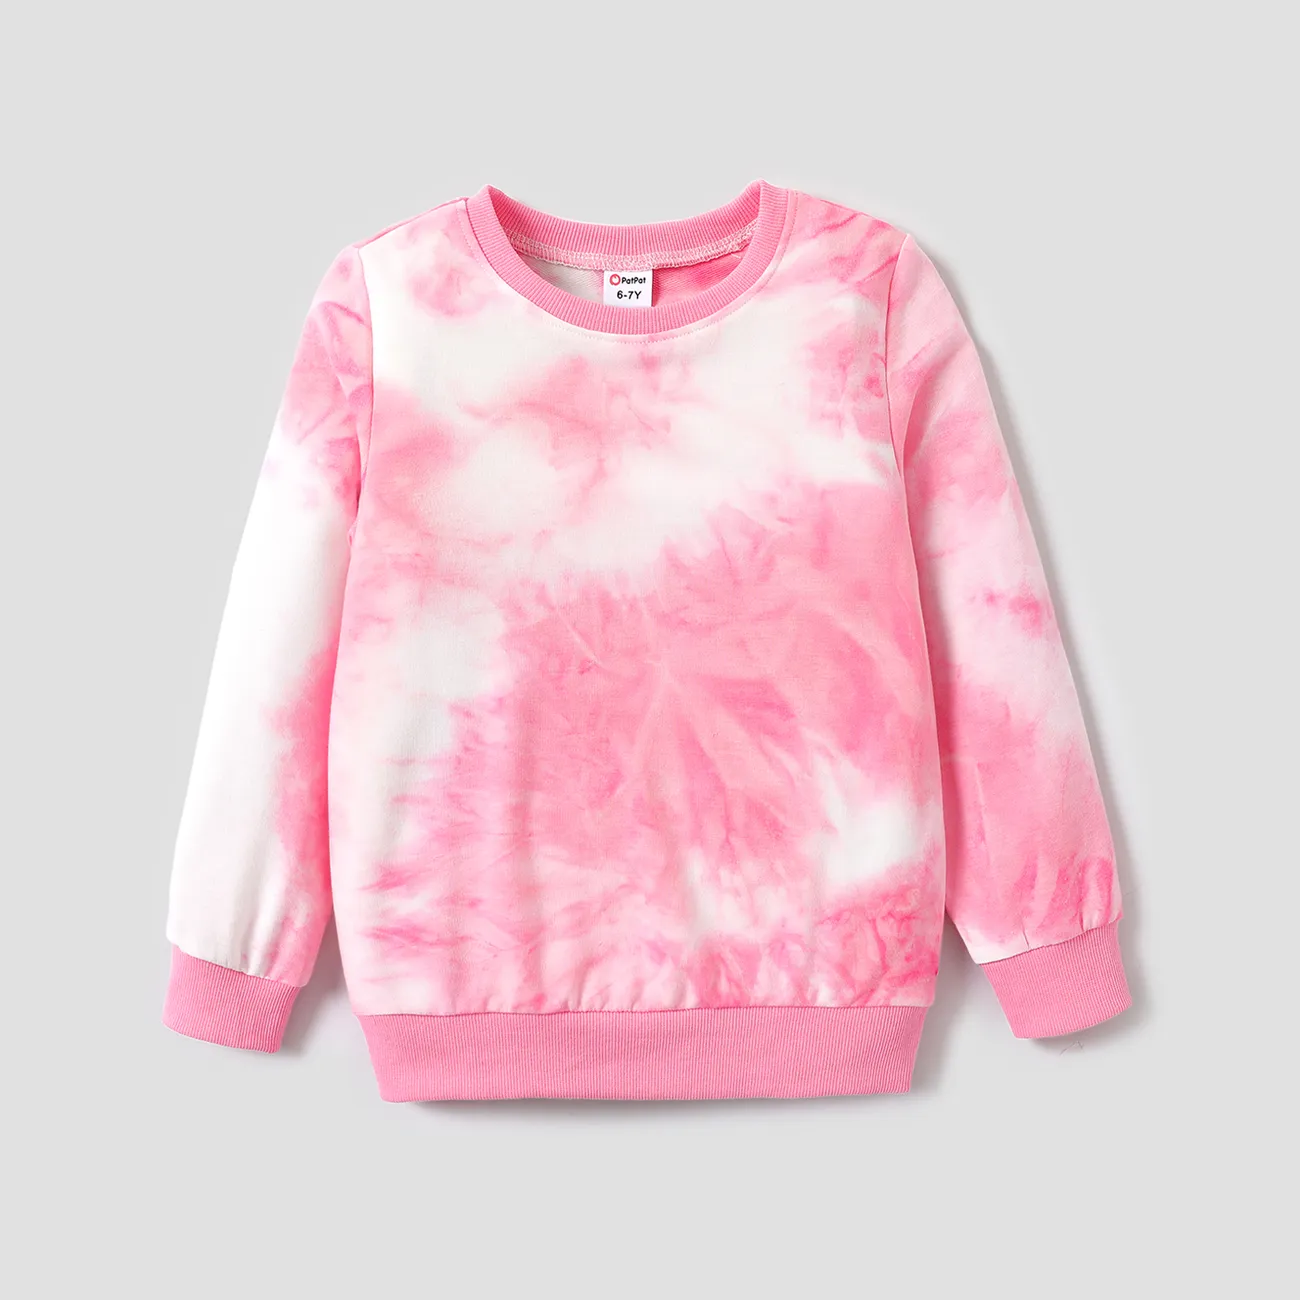 Kinder Unisex Batikmuster Pullover Sweatshirts rosa big image 1